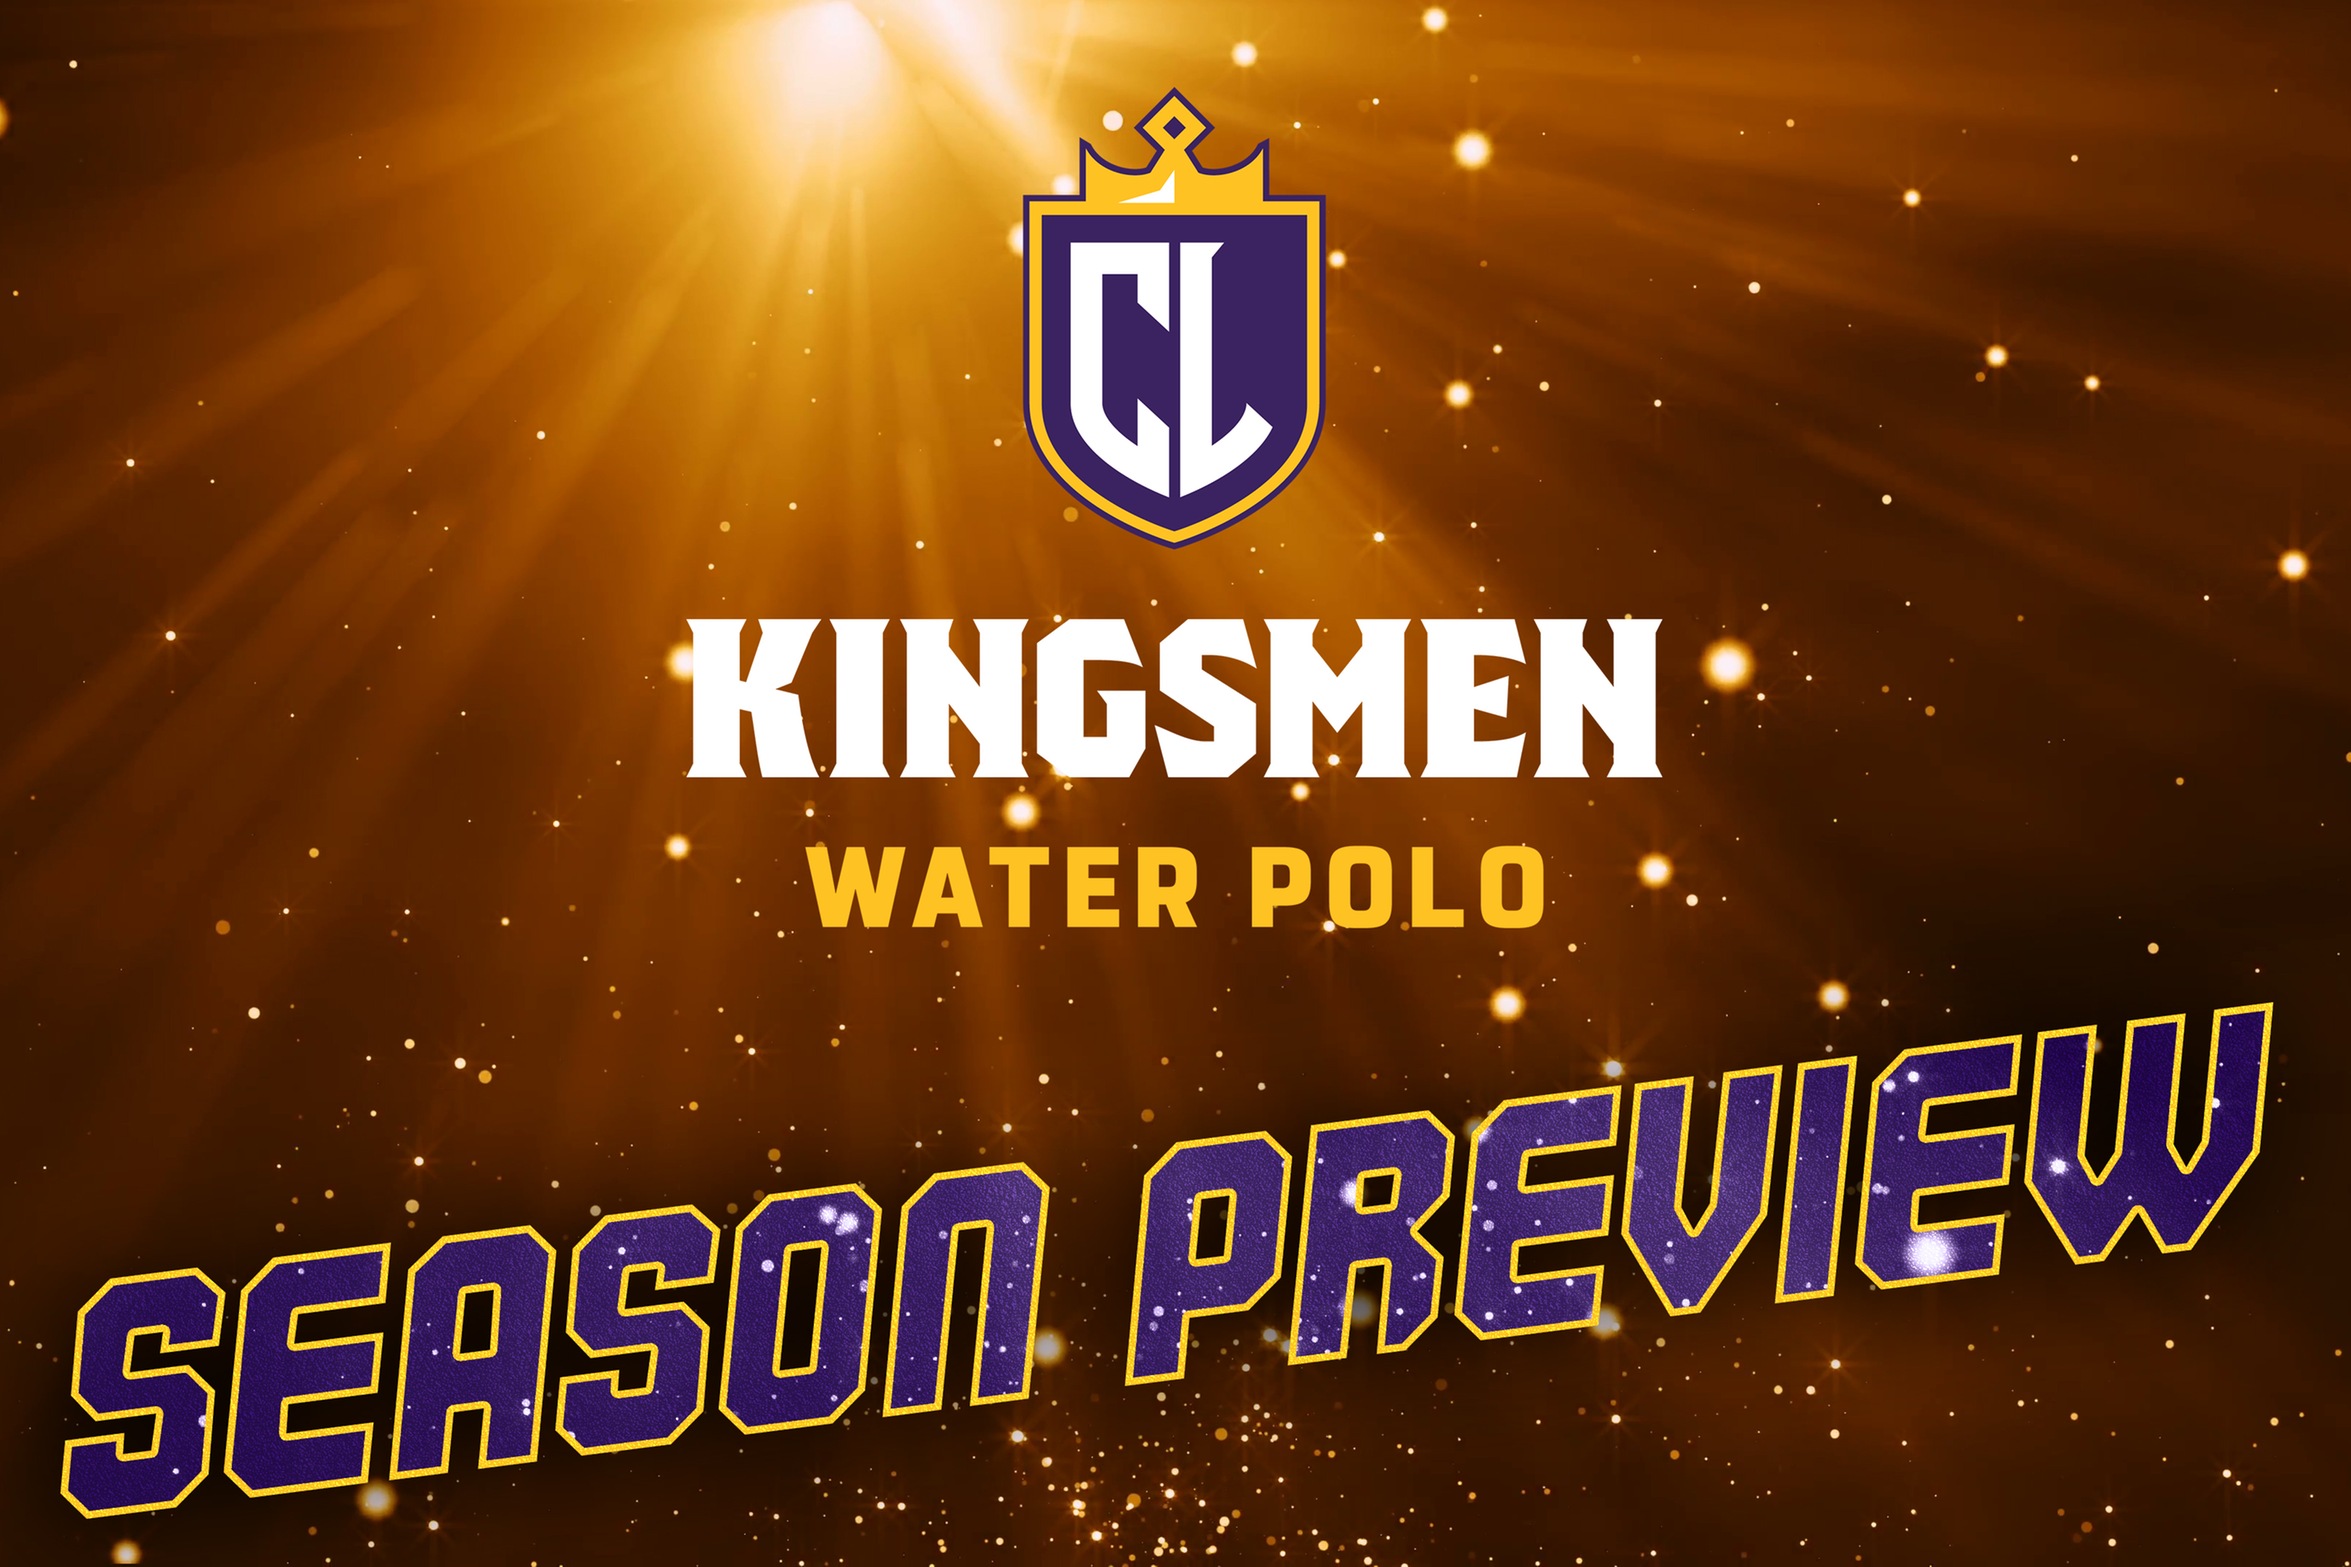 Kingsmen Water Polo is Back in the Pool